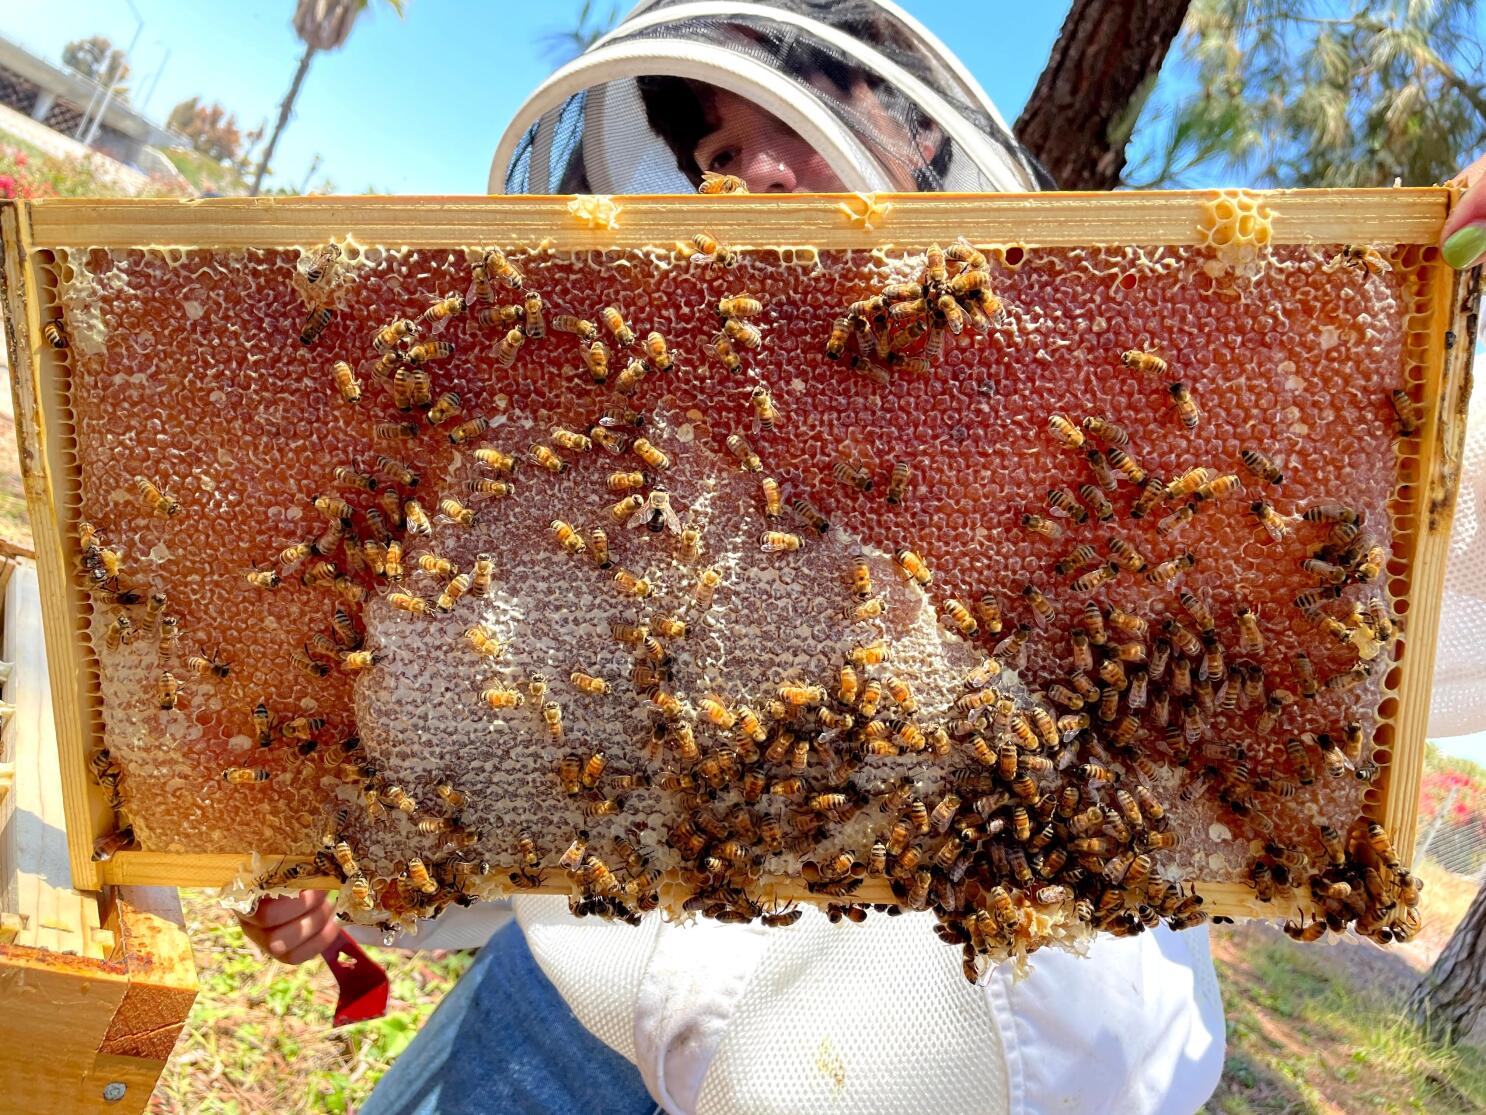 Urban beekeeping efforts create buzz in north Fort Worth